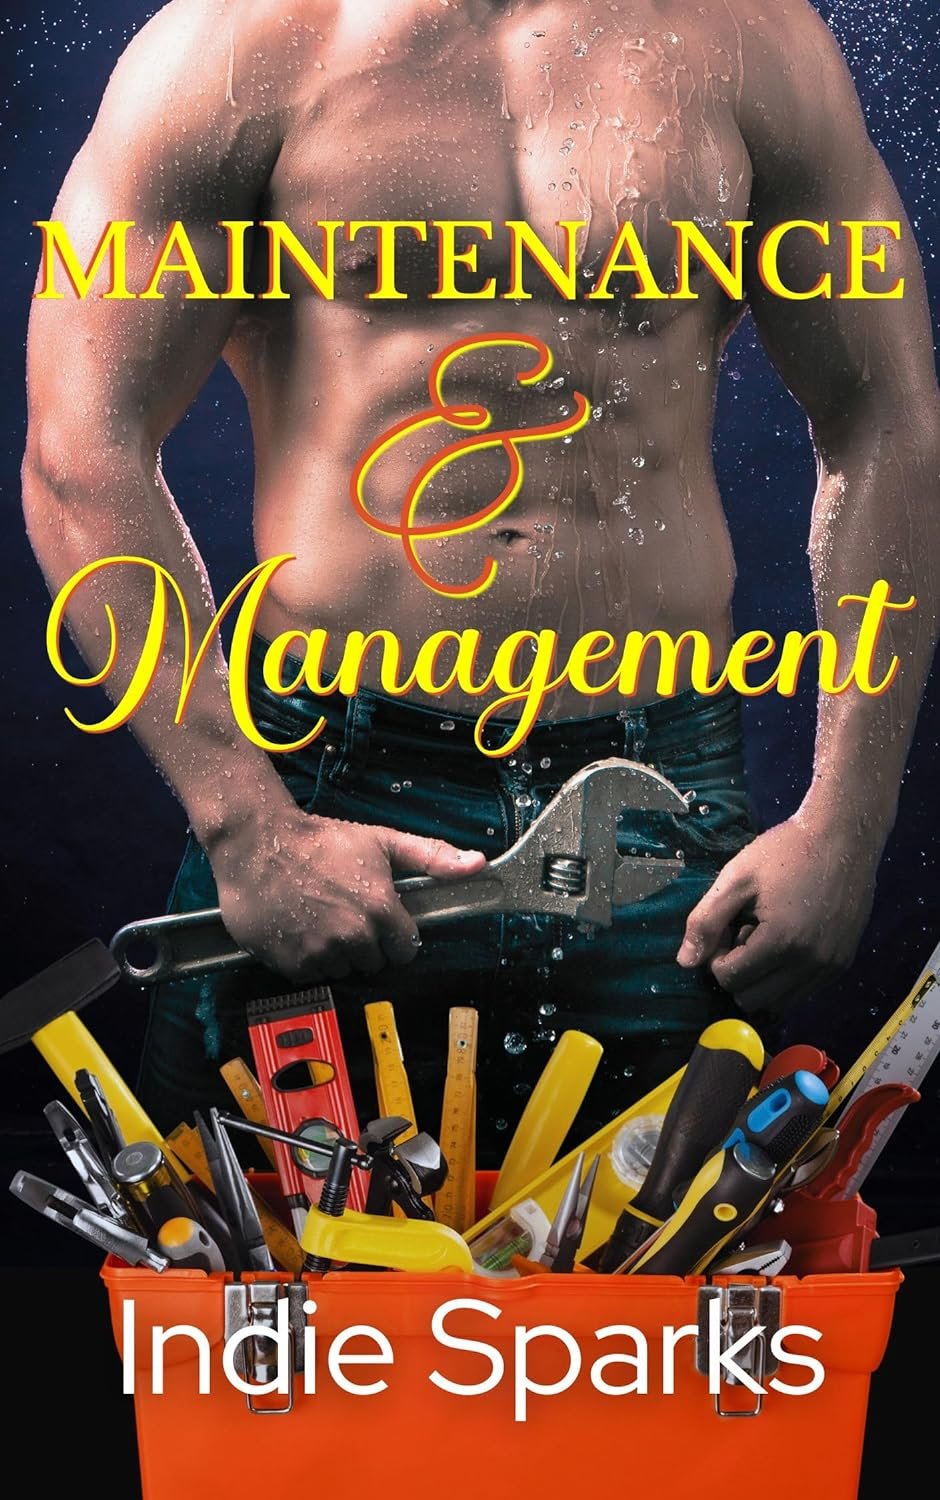 Maintenance and Management (manchest).jpg